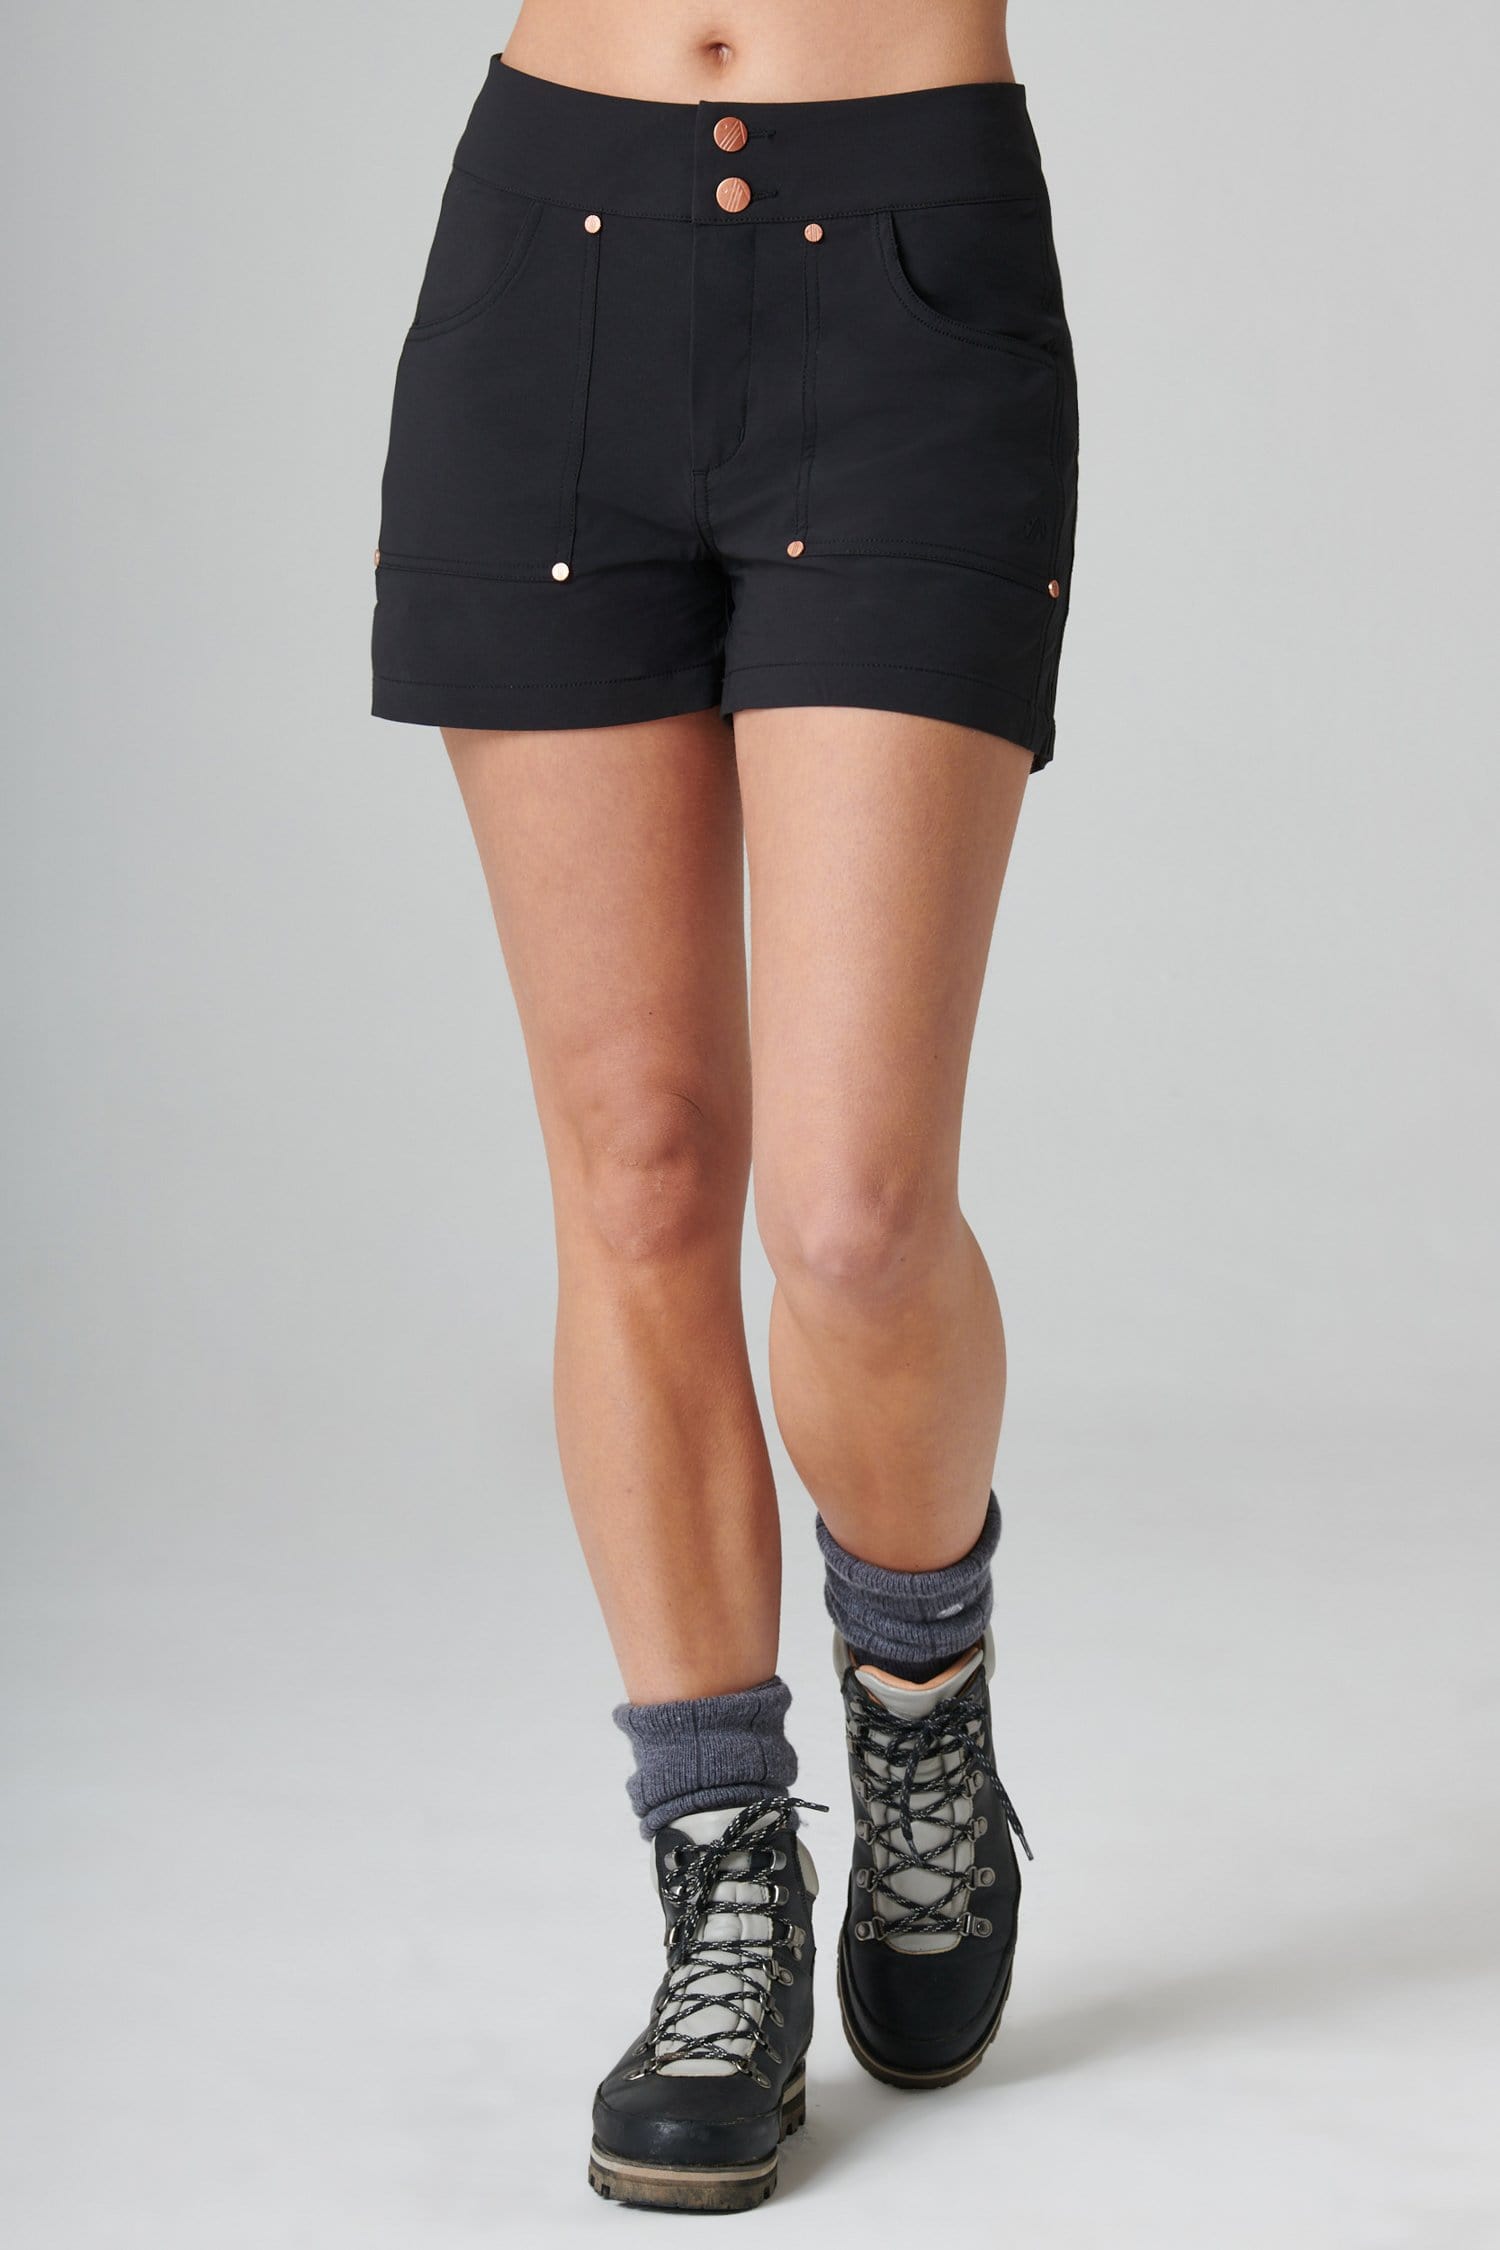 Trek Shorts - Black - 32 / Uk14 - Womens - Acai Outdoorwear